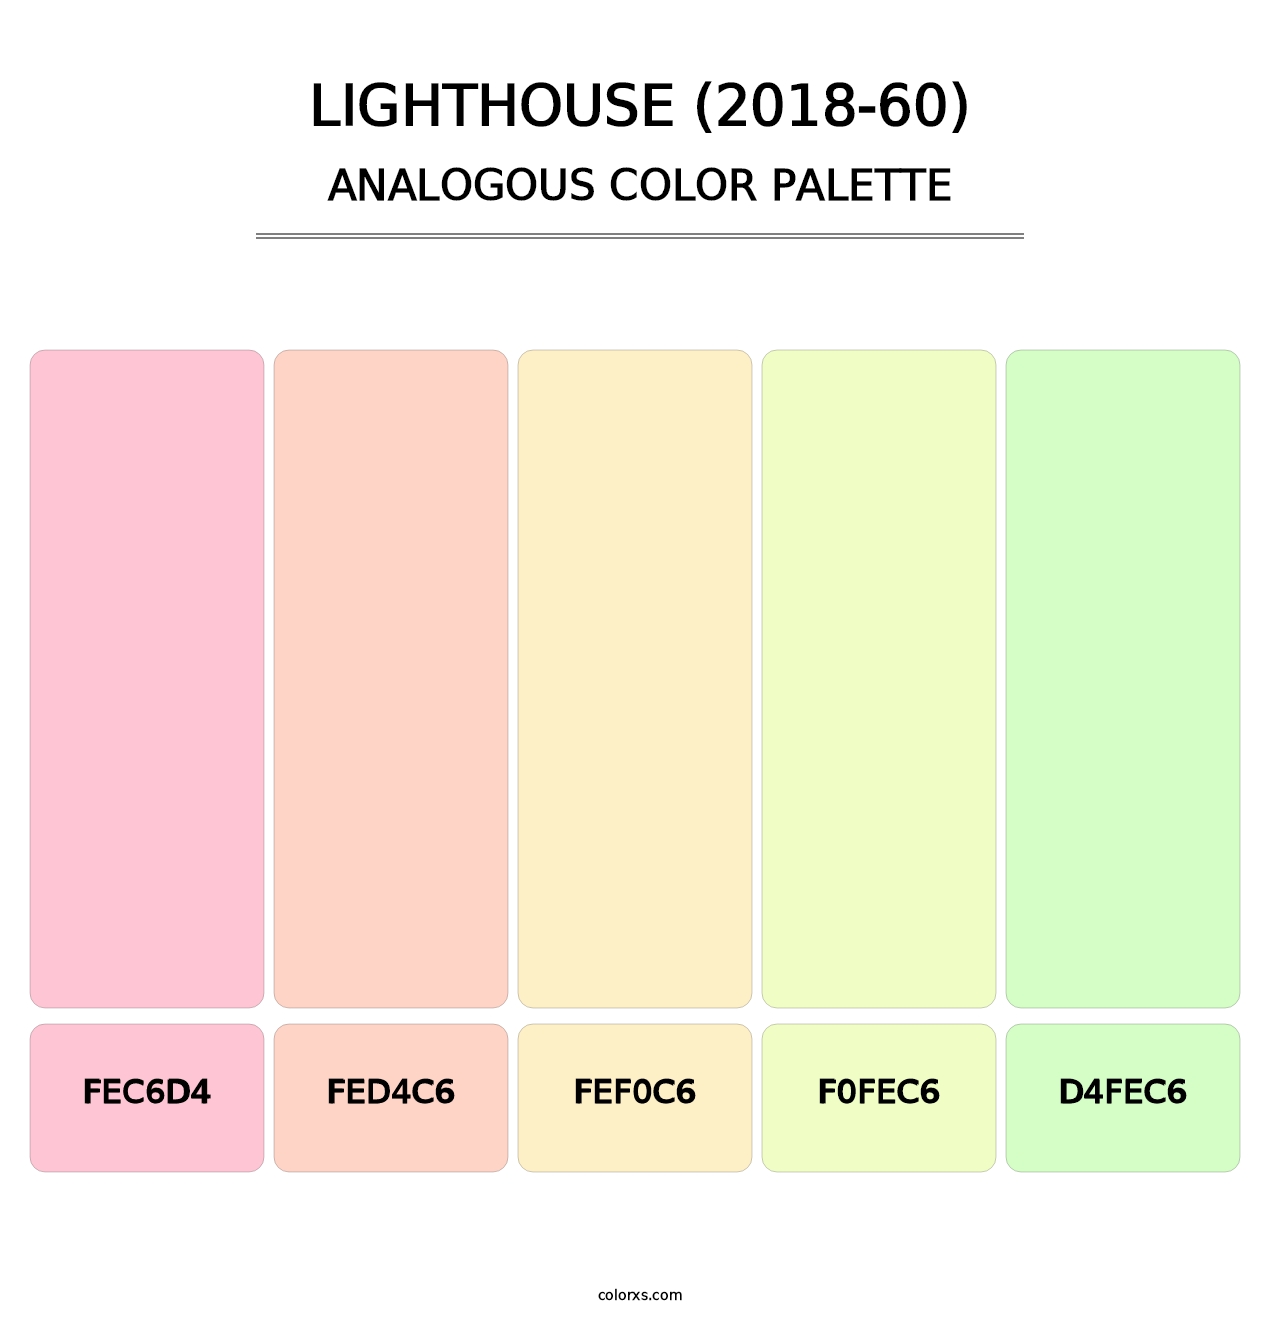 Lighthouse (2018-60) - Analogous Color Palette